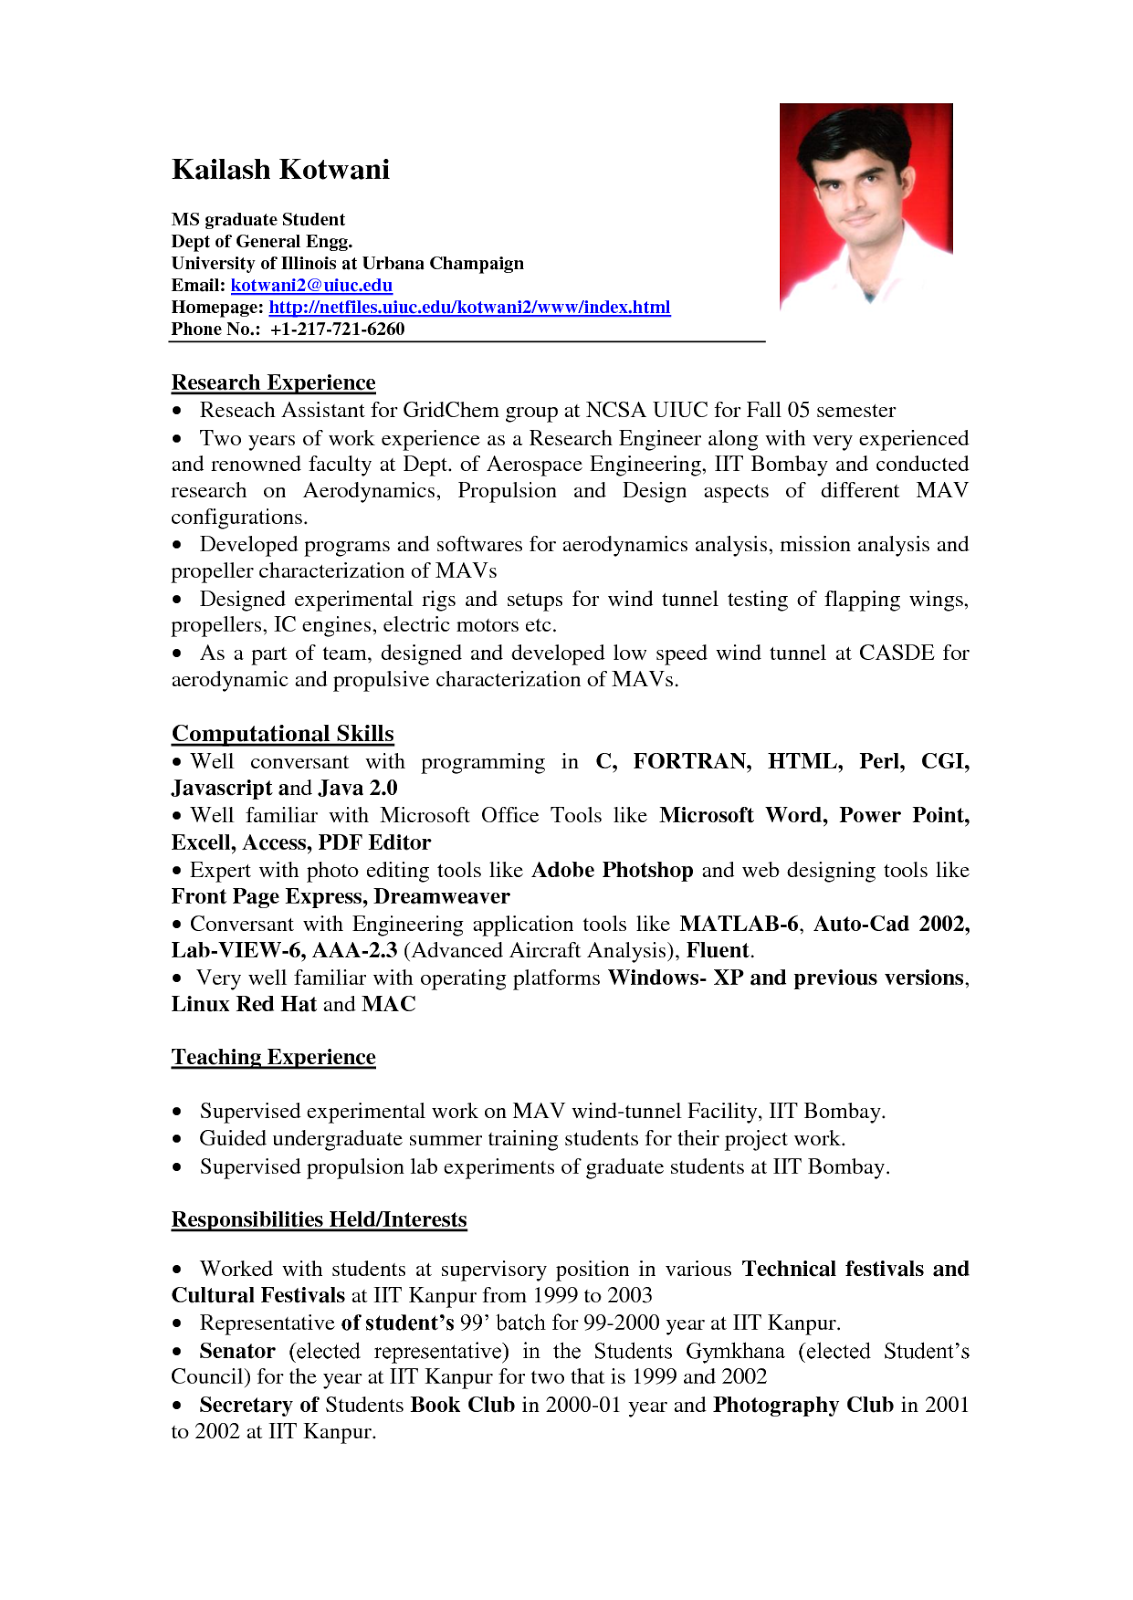 Sample formal resume template